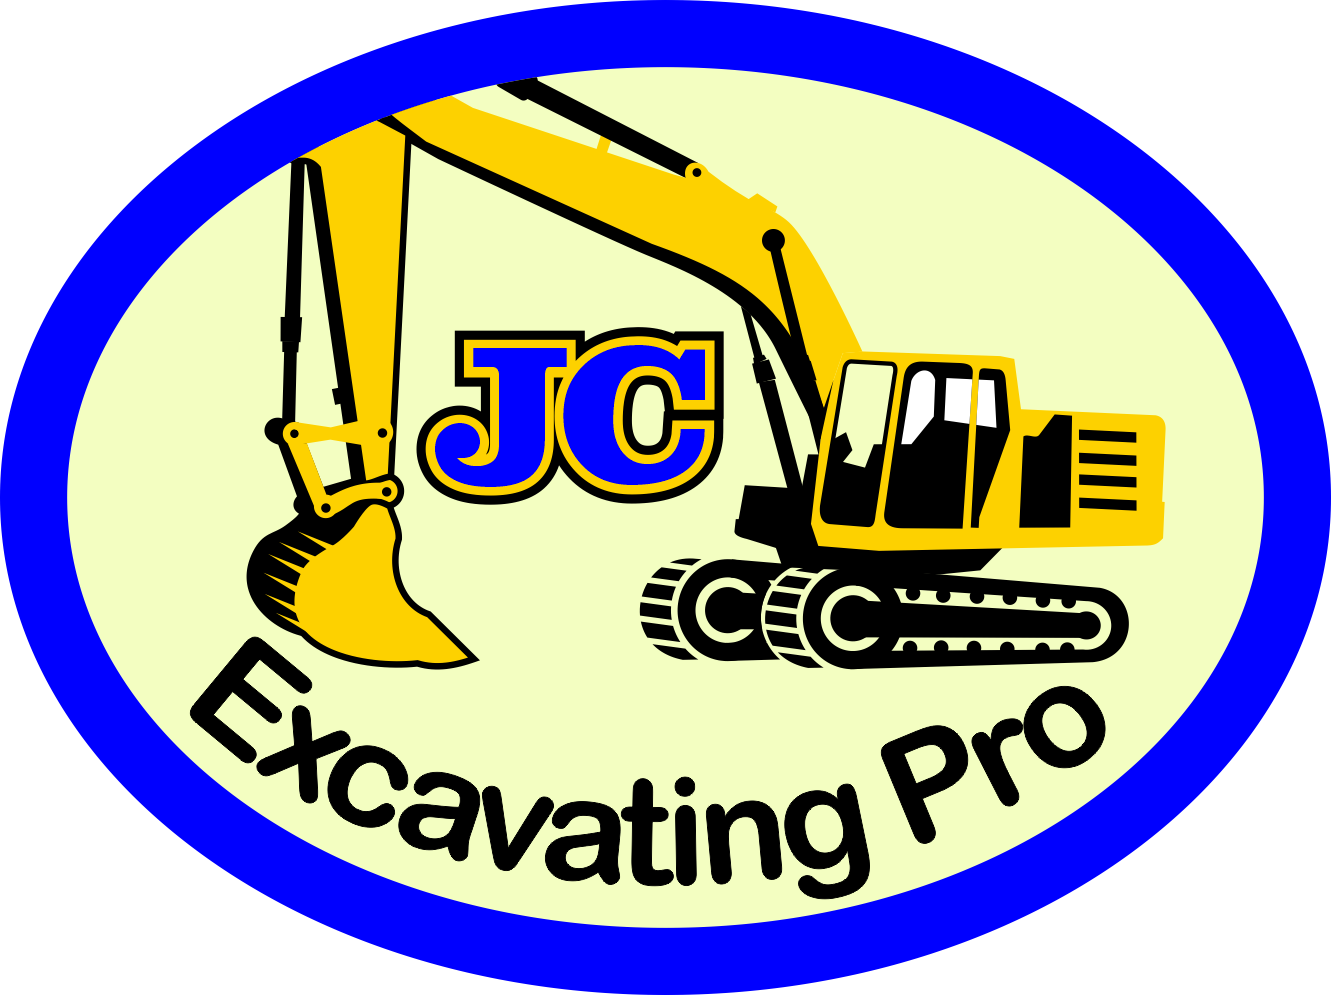 J.C. Excavating Pro Logo